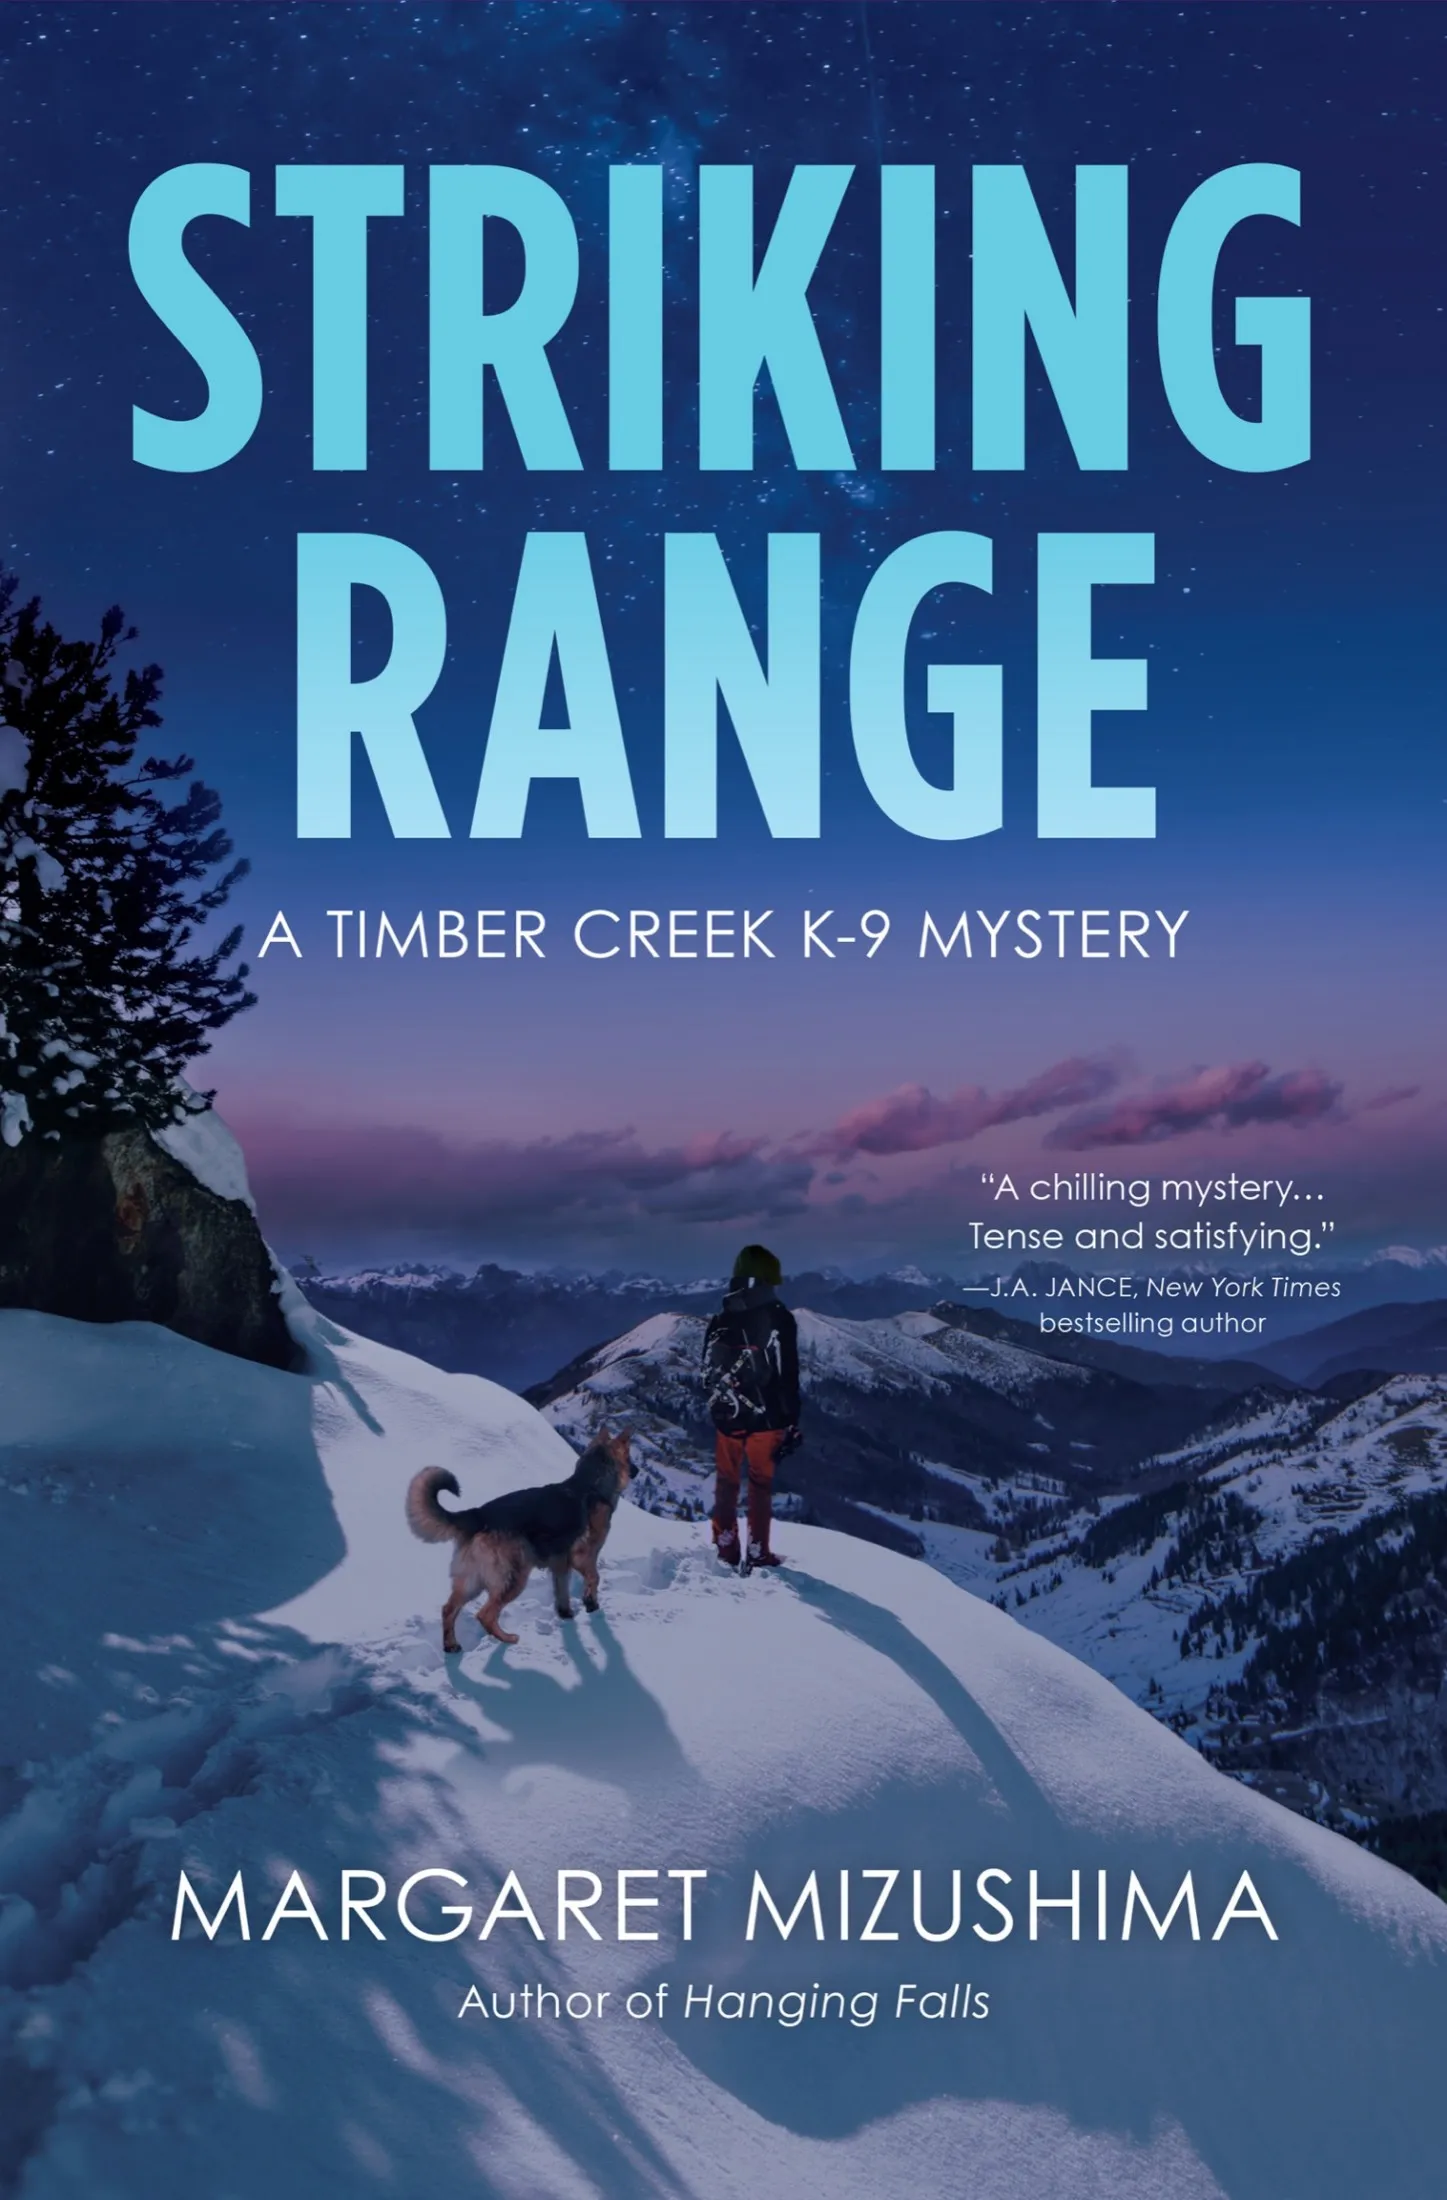 Striking Range (A Timber Creek K-9 Mystery #7)